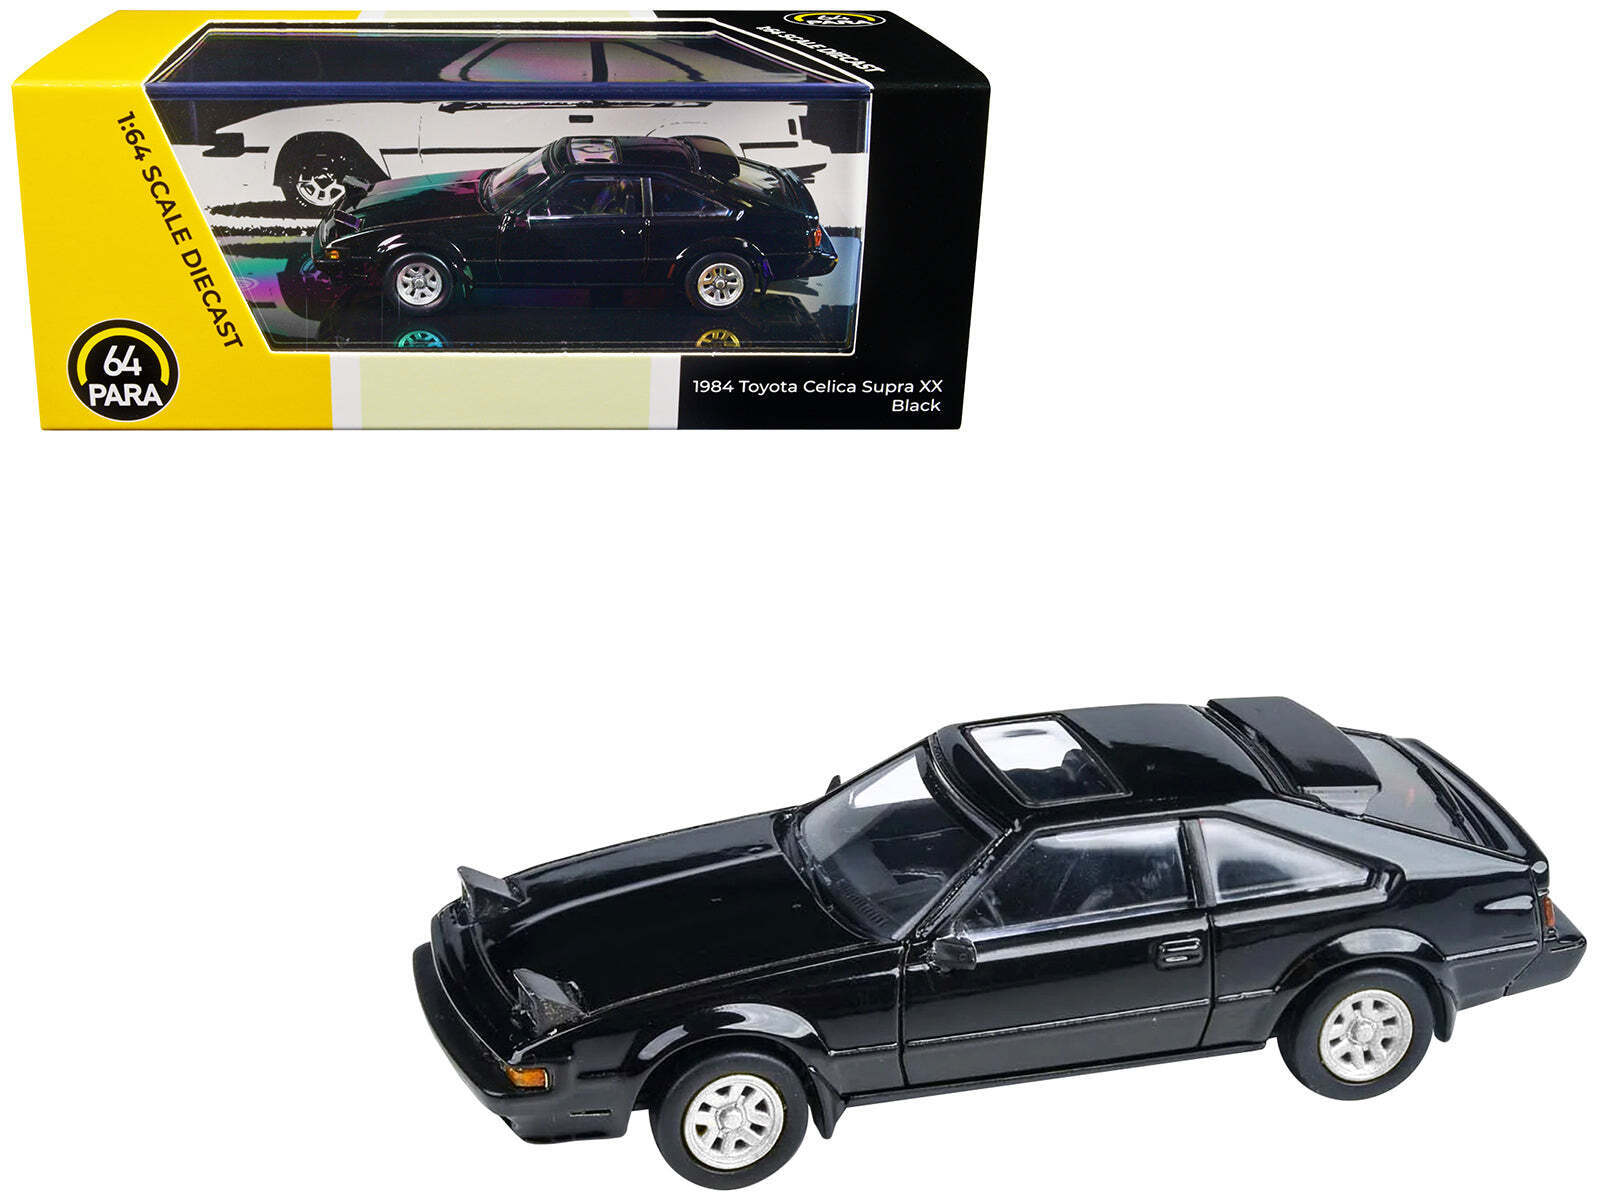 1984 Toyota Celica Supra XX Black with Sunroof 1/64 Diecast Model Car